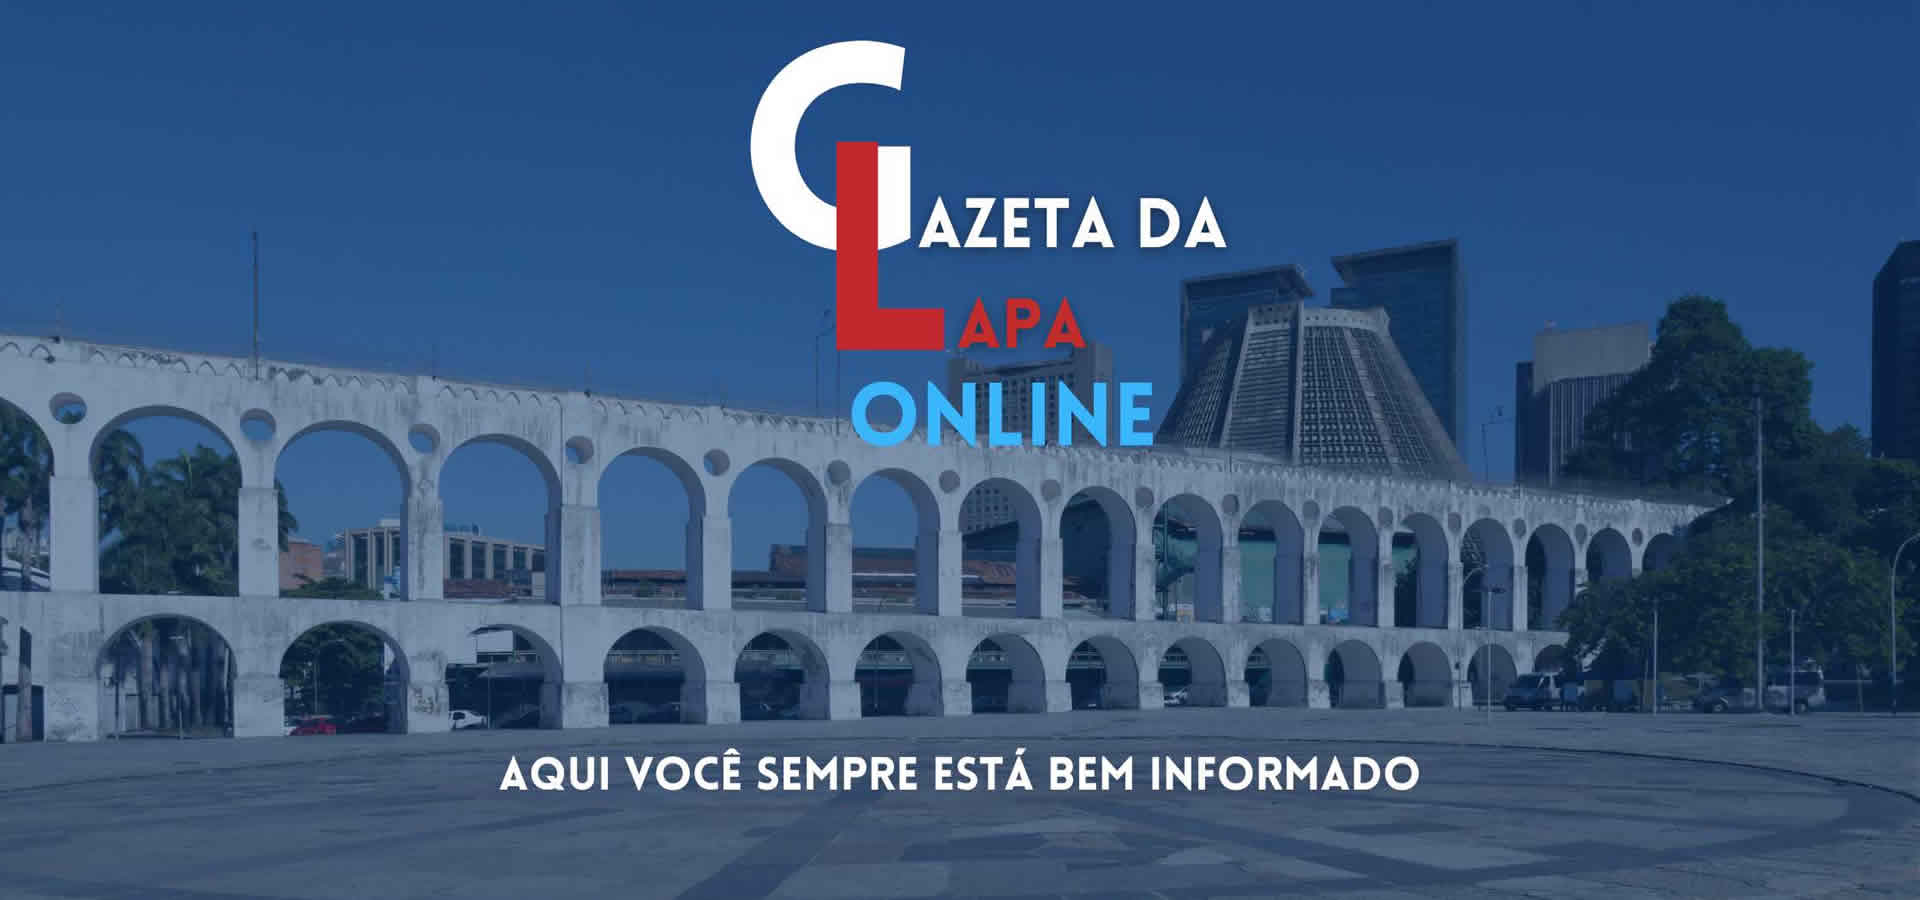 (c) Jornalgazetadalapa.com.br